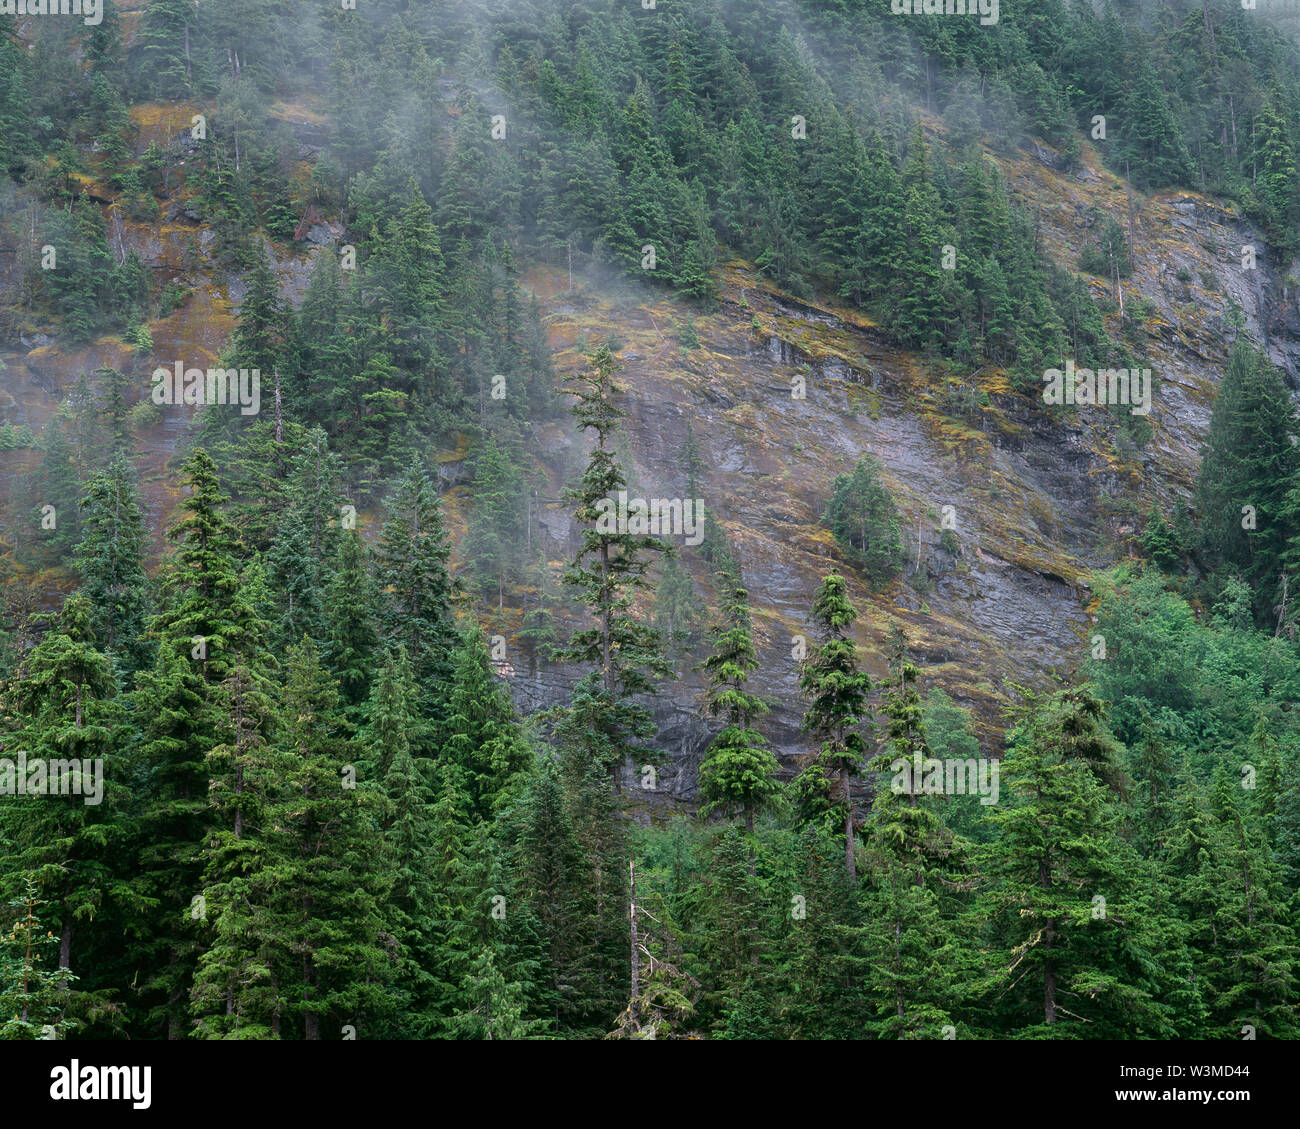 USA, Washington, Mt. Rainier National Park, Mist swirls among evergreen trees on steep sides of Eagle Peak. Stock Photo